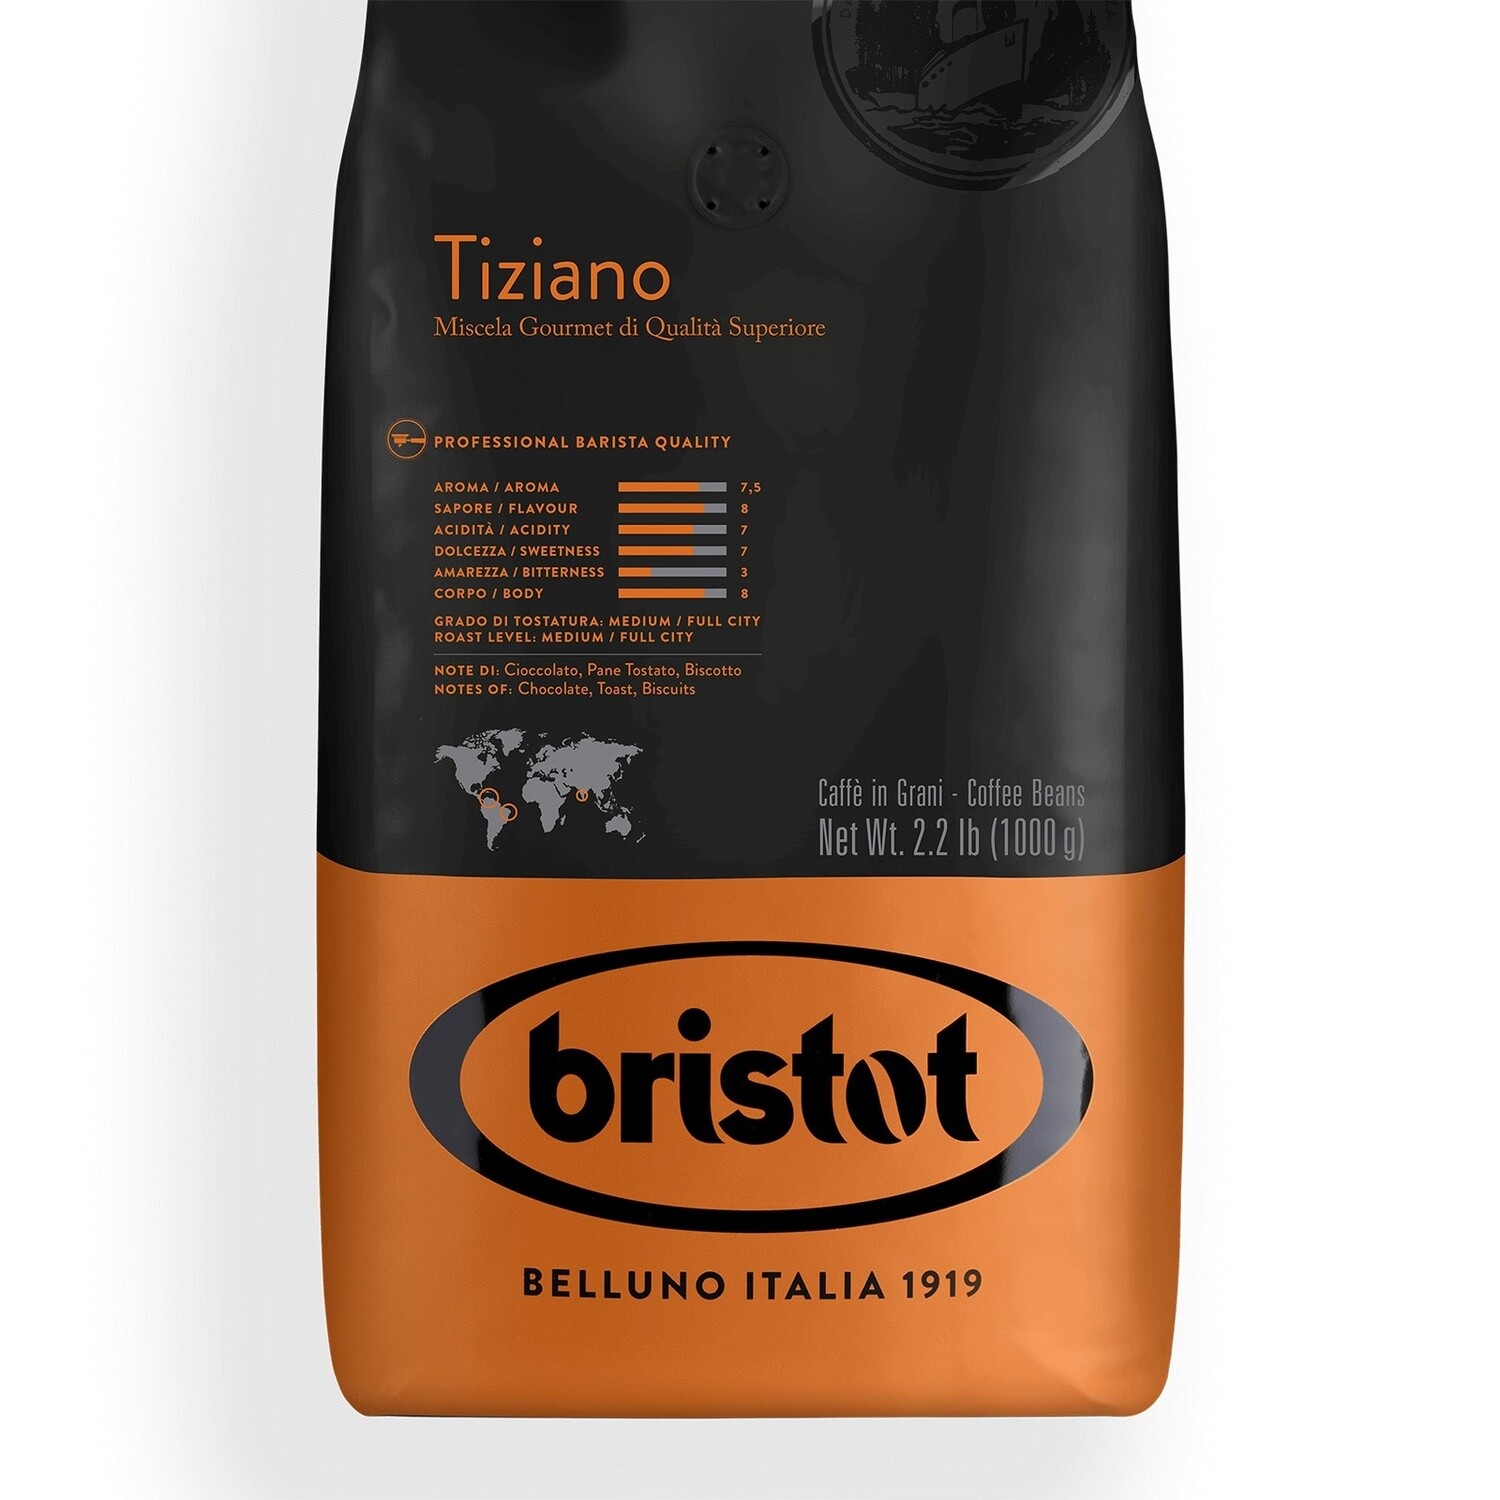 Bristot Tiziano 1 kg 2.2 lbs Whole Bean Coffee